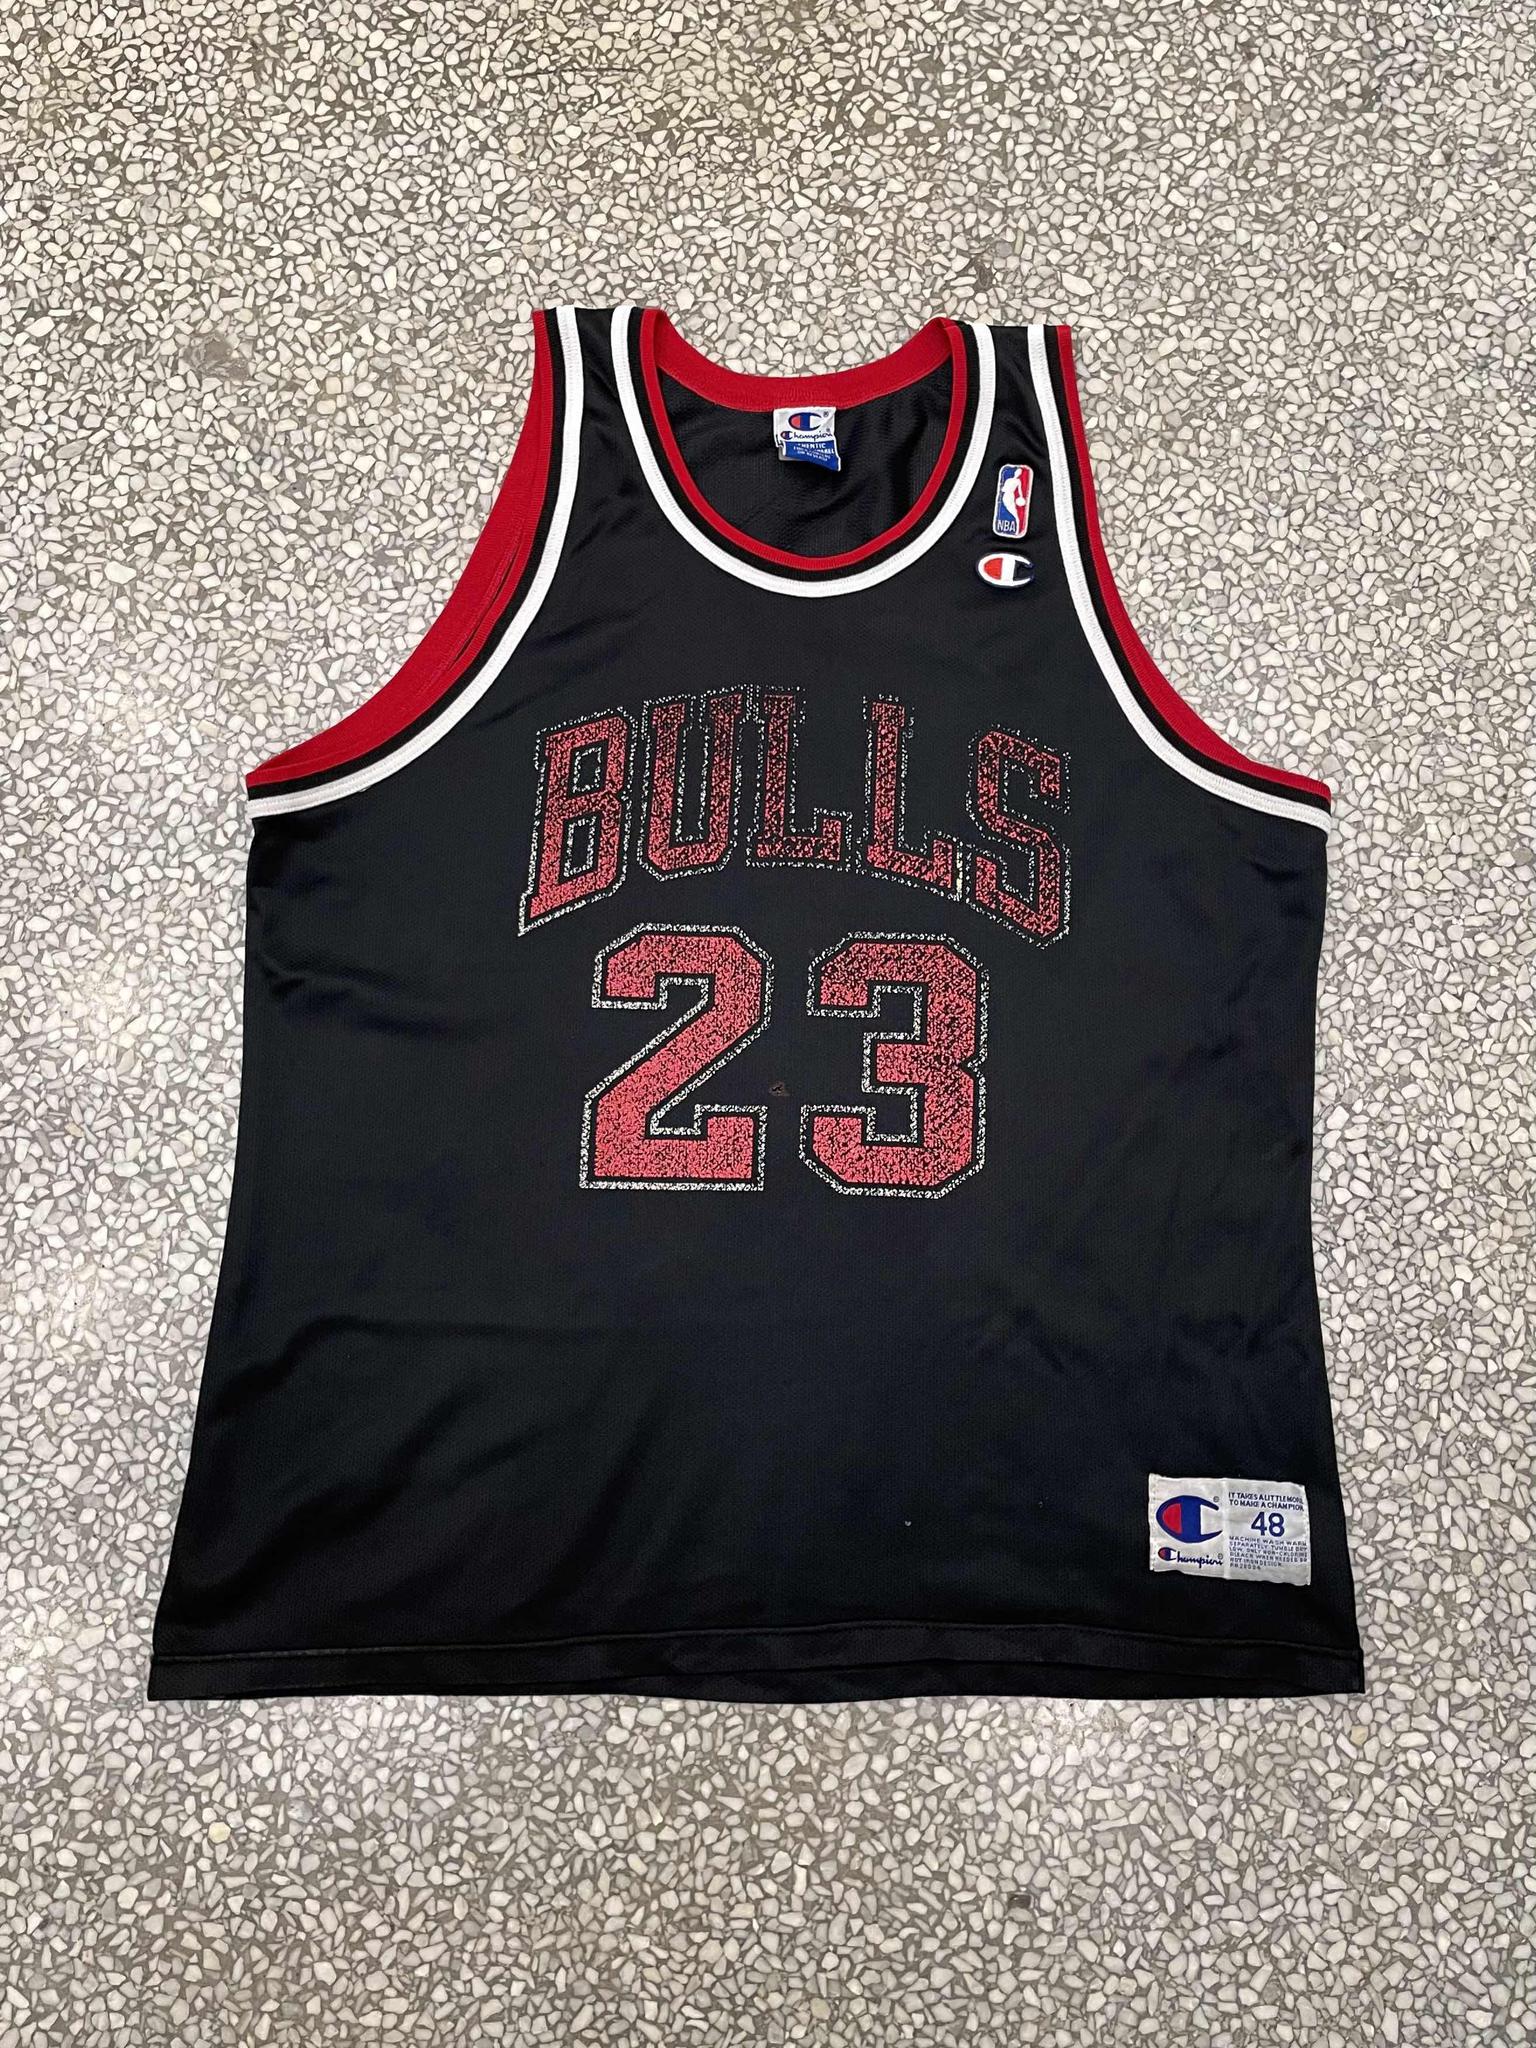 Michael Jordan Chicago Bulls Vintage 90's Black Champion Jersey